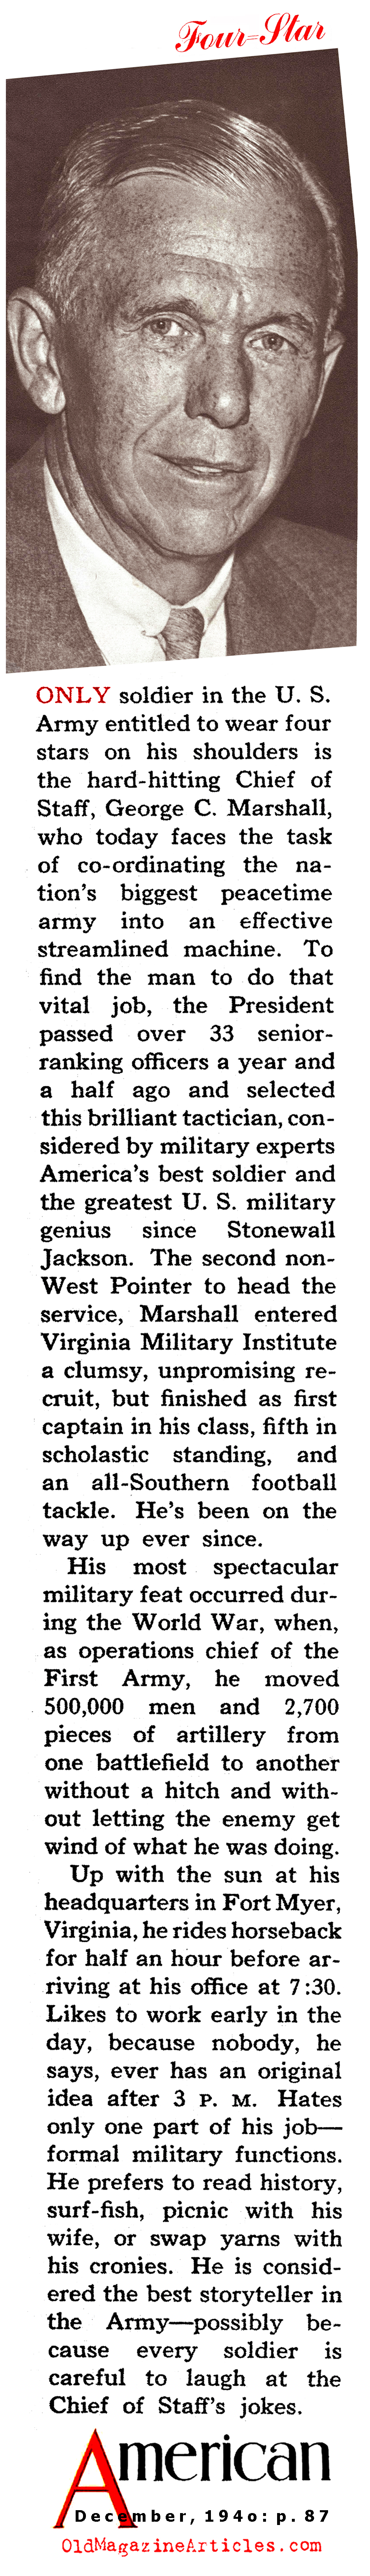 General George C. Marshall (American Magazine, 1940)